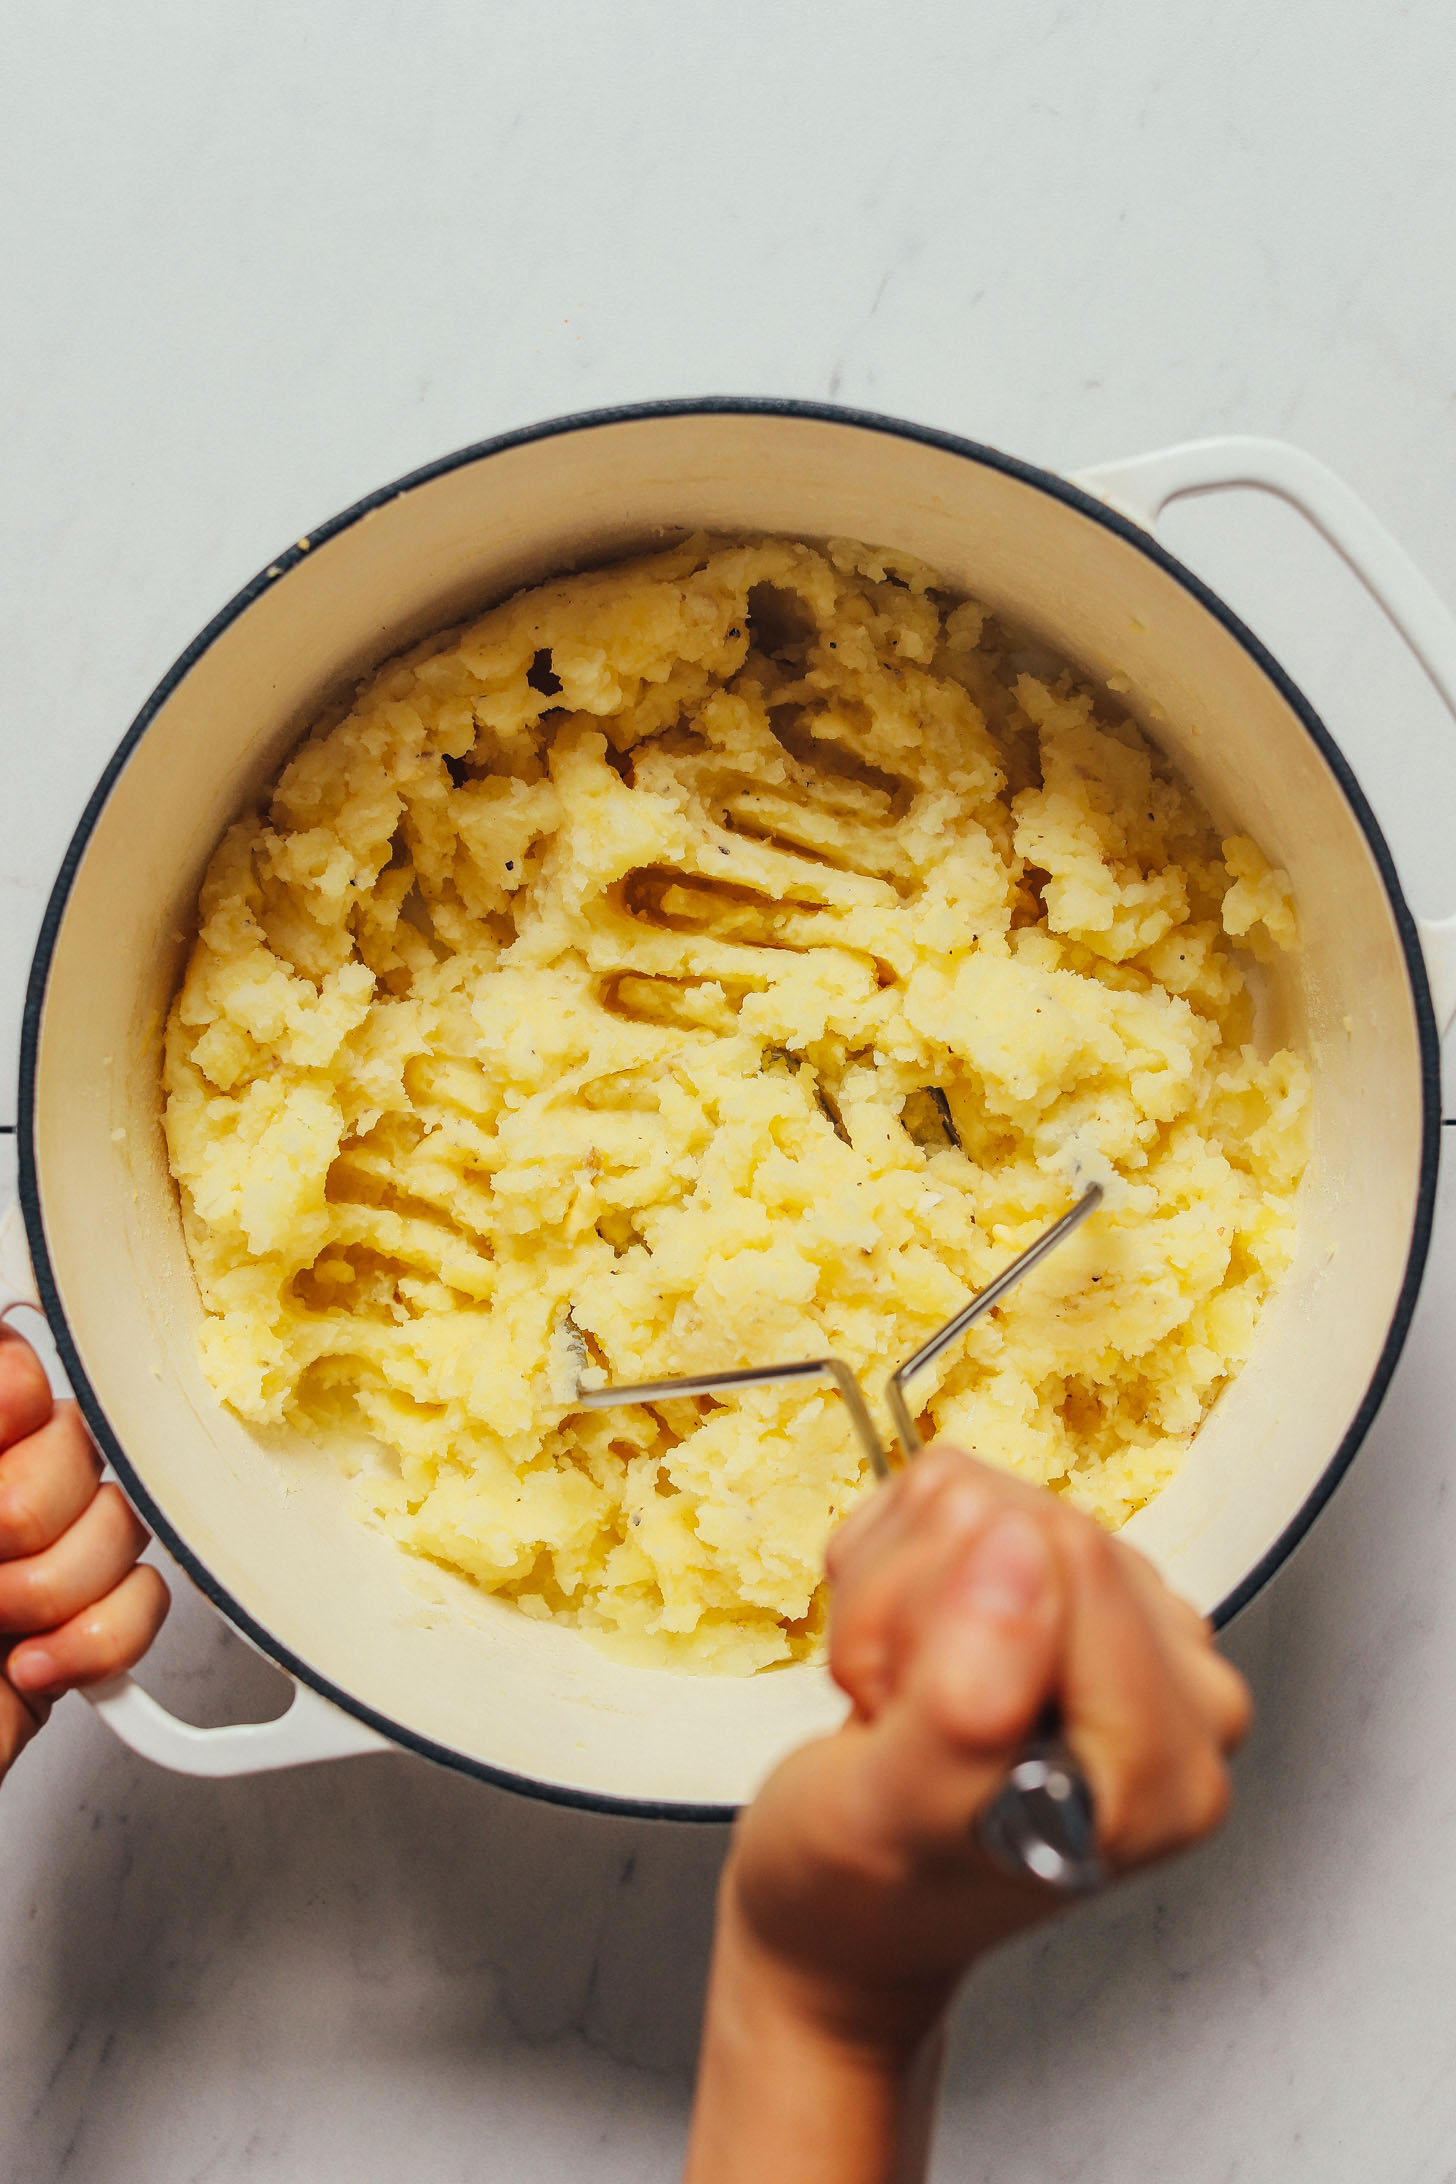 Using a potato masher to make homemade mashed potatoes